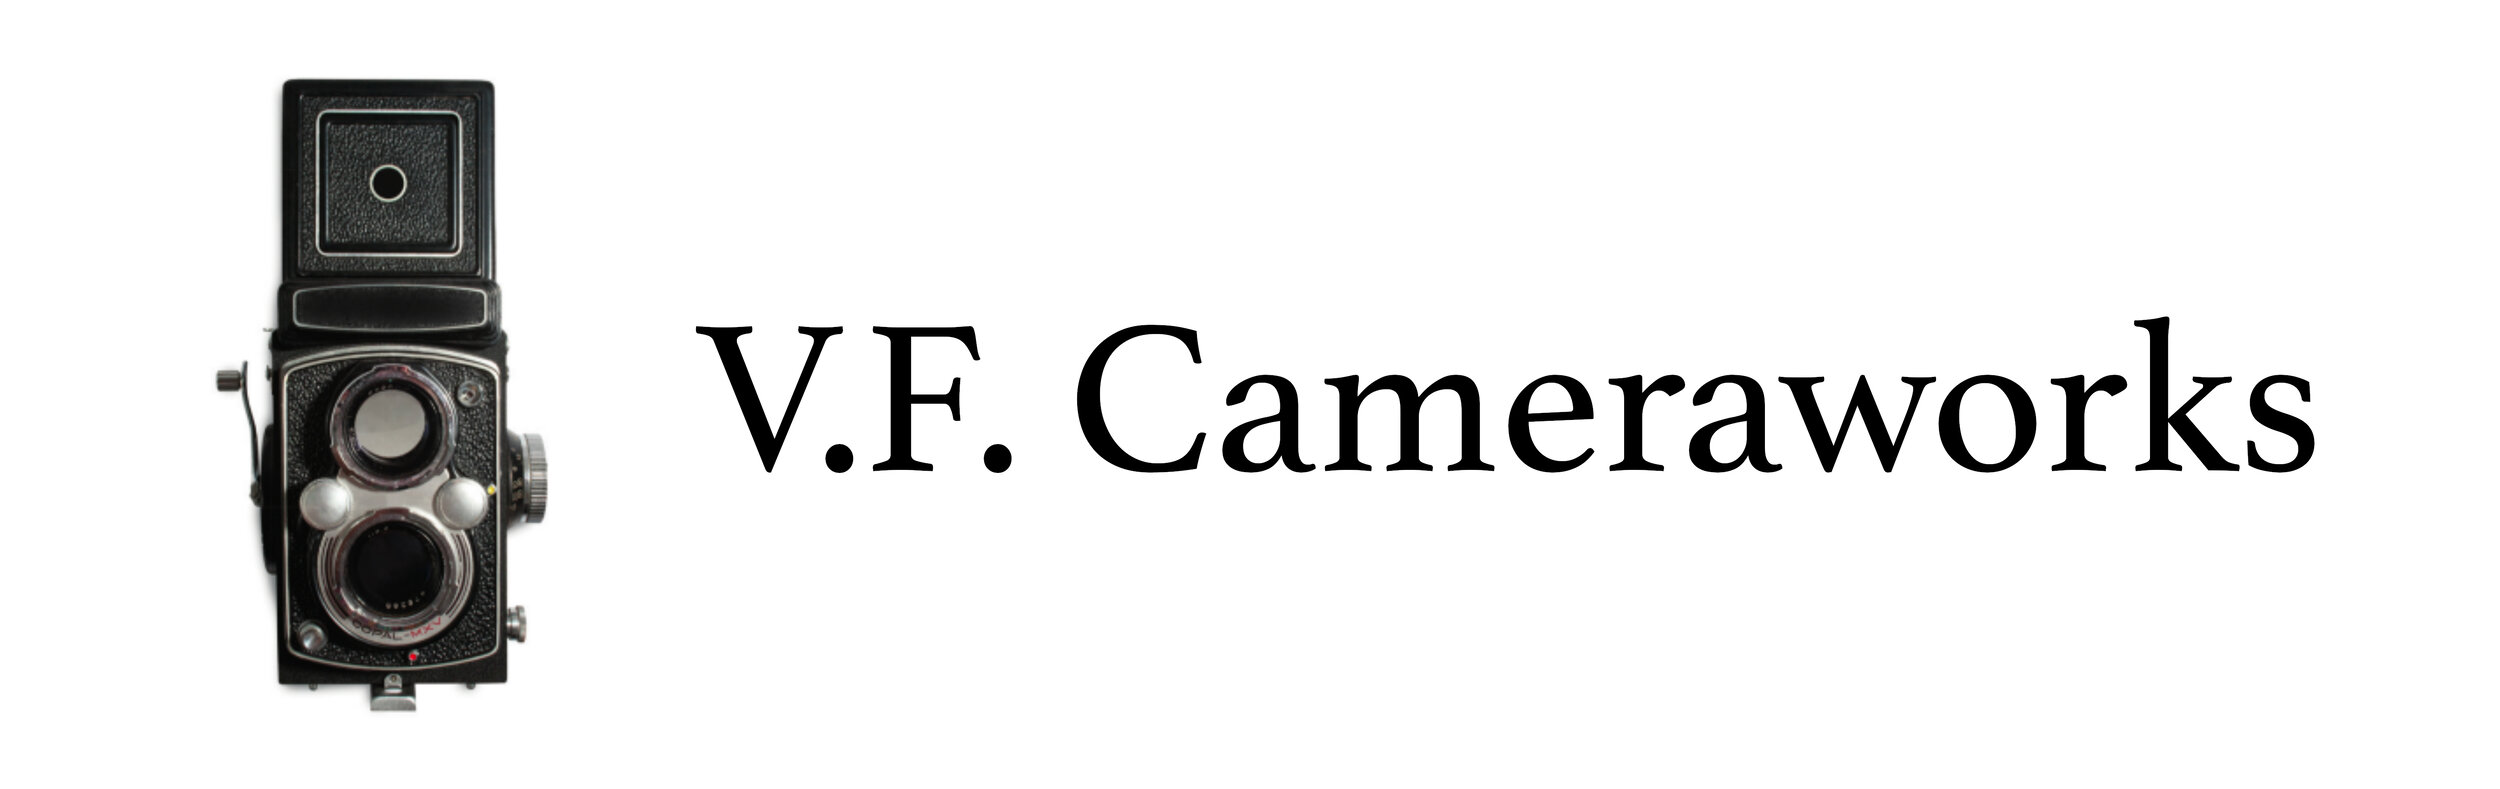 V.F. Cameraworks